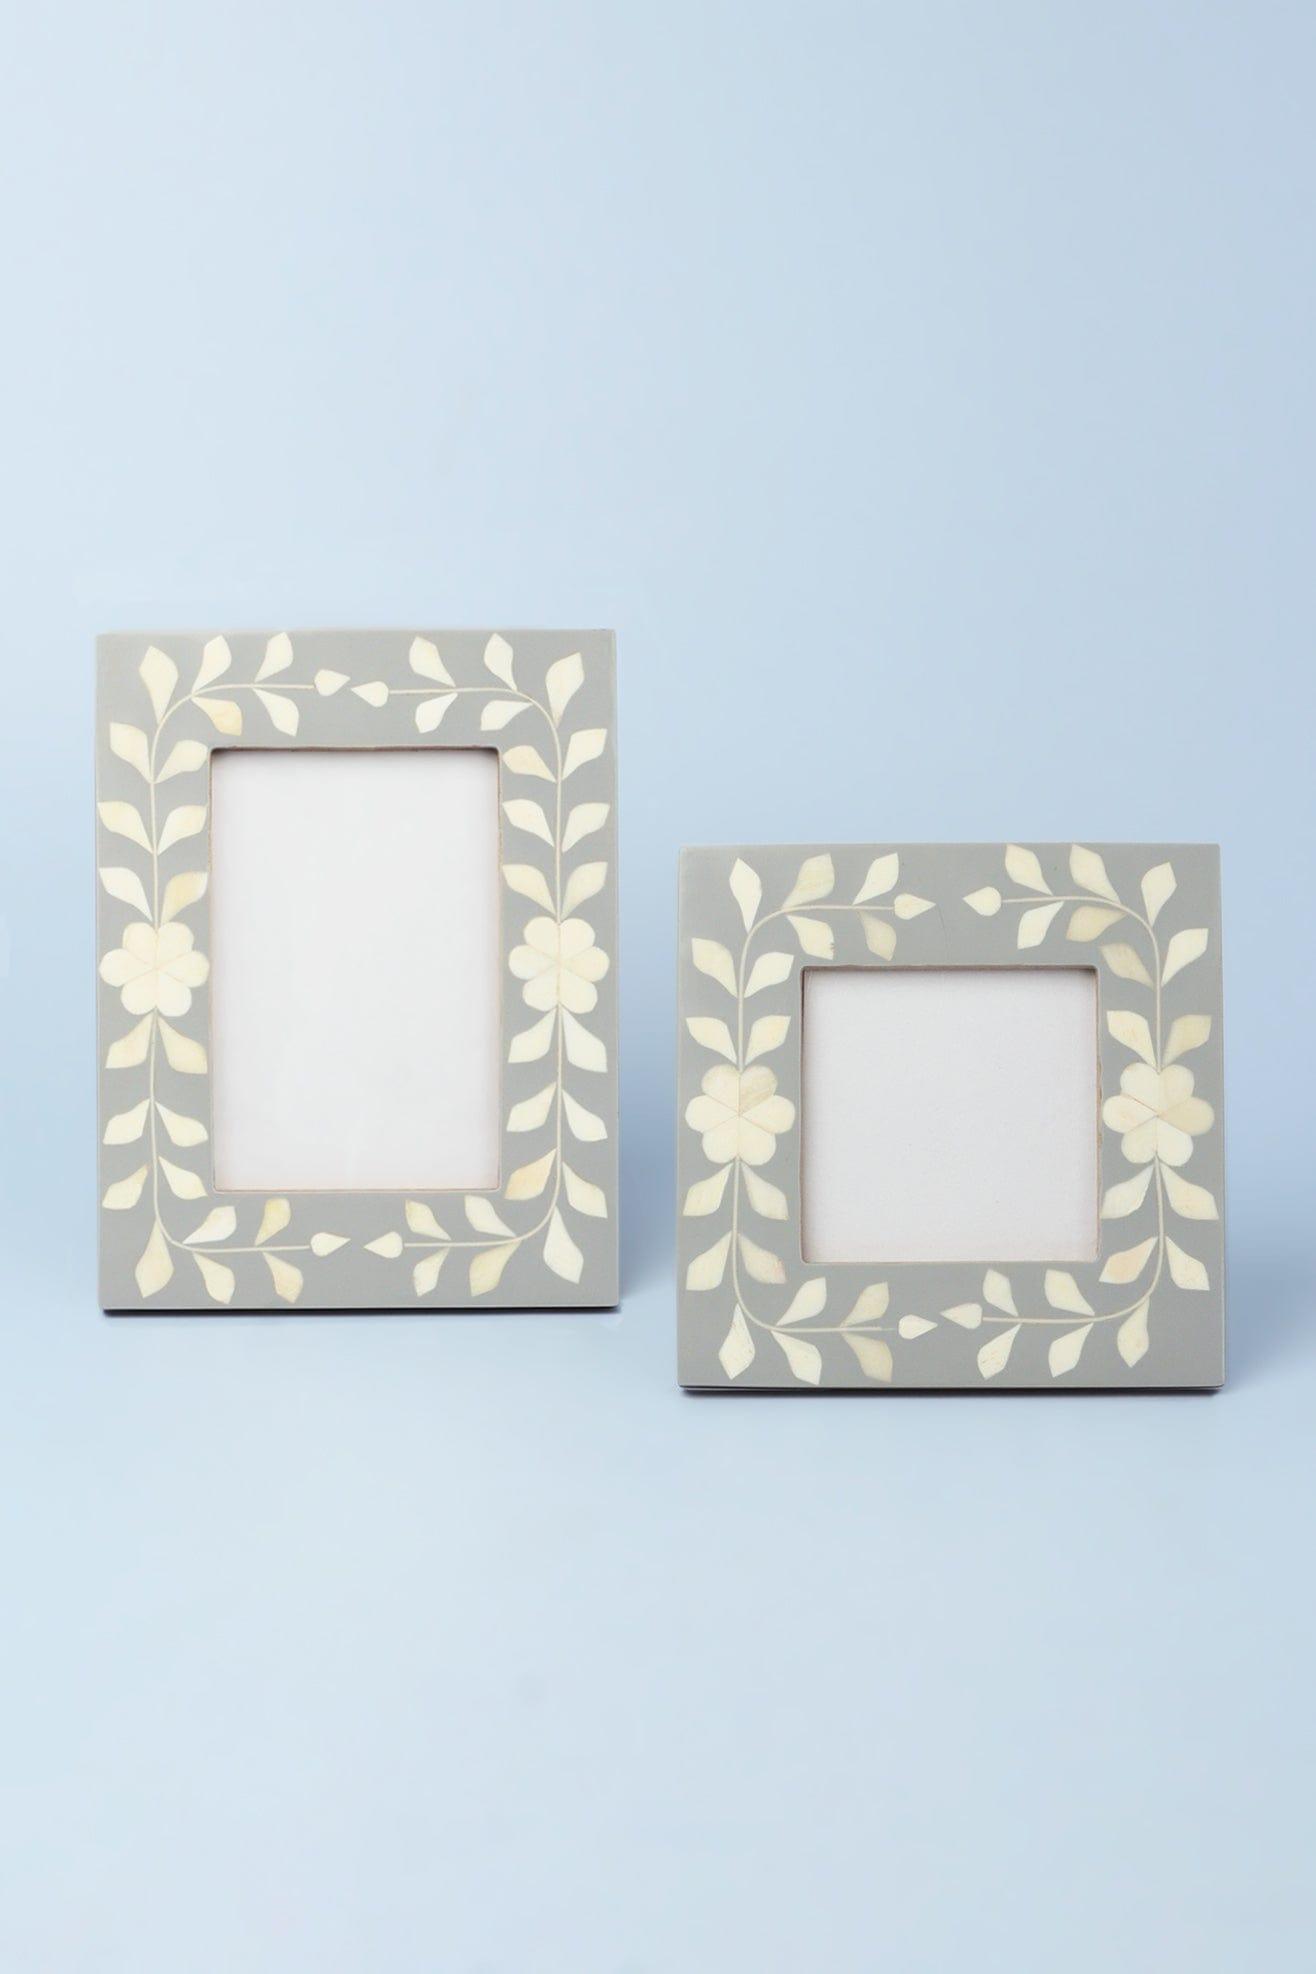 G Decor Picture frames White Flower Grey Stylish Photo Frames